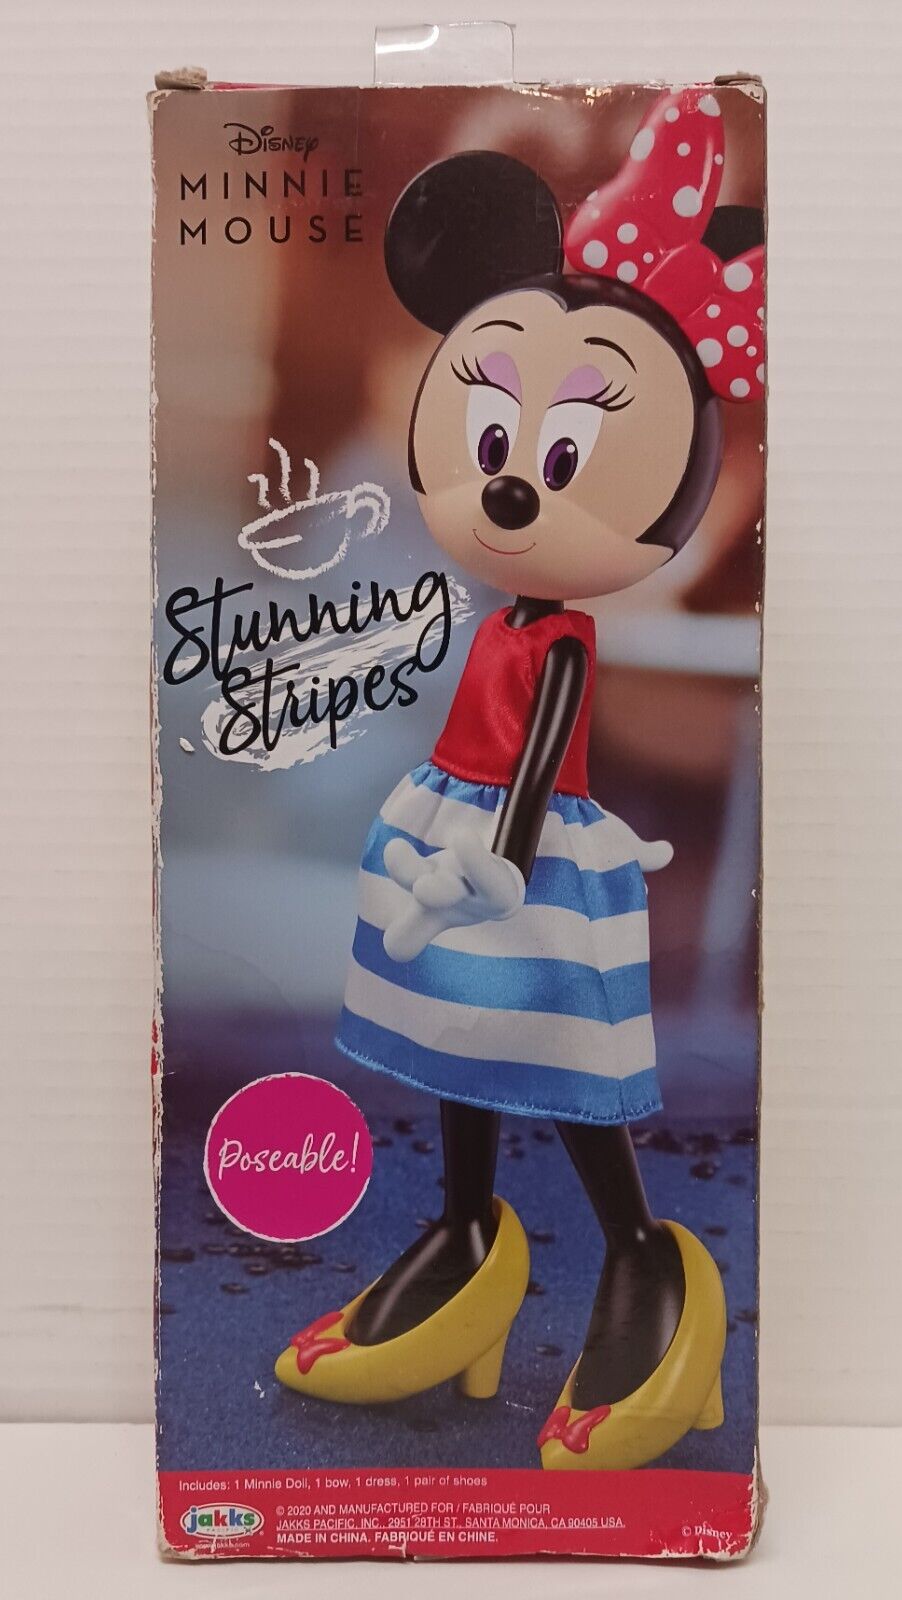 Disney Minnie Mouse Poseable Doll Jakks Pacific 2020 New in Box Stunning Stripes